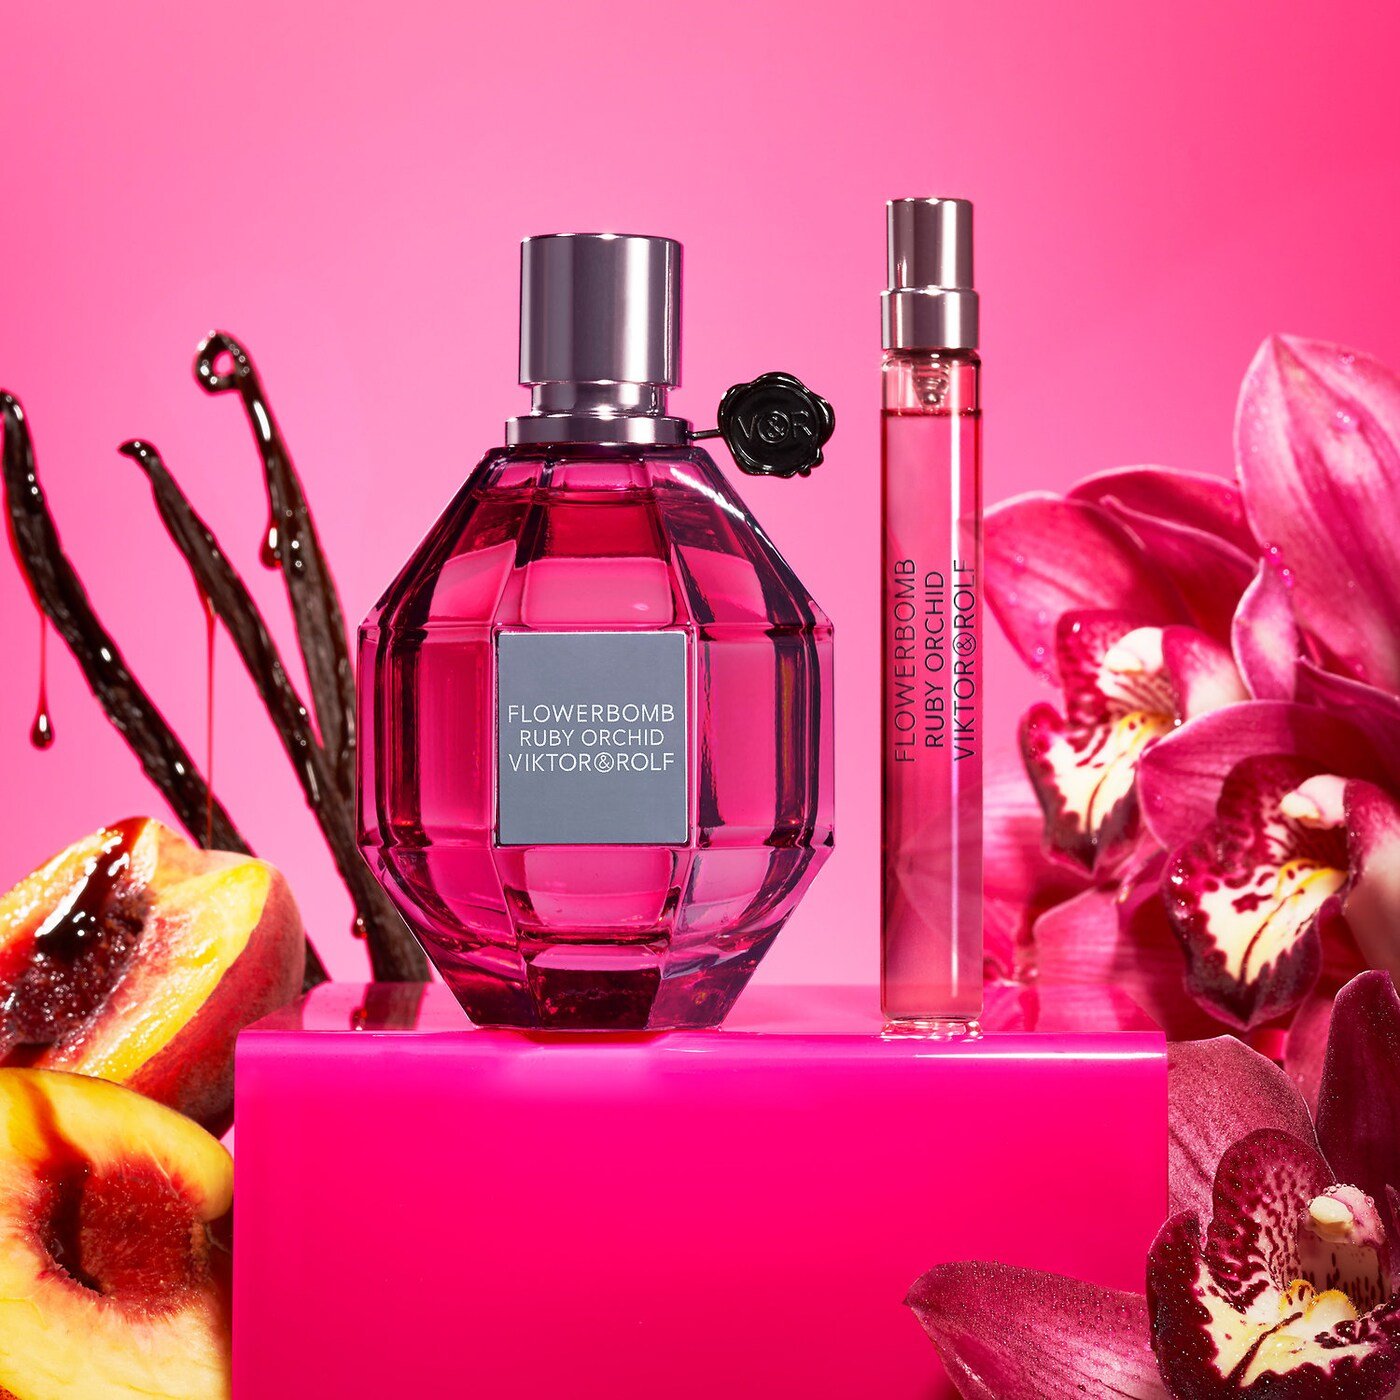 Viktor & Rolf Flowerbomb Ruby Orchid EDP | My Perfume Shop Australia